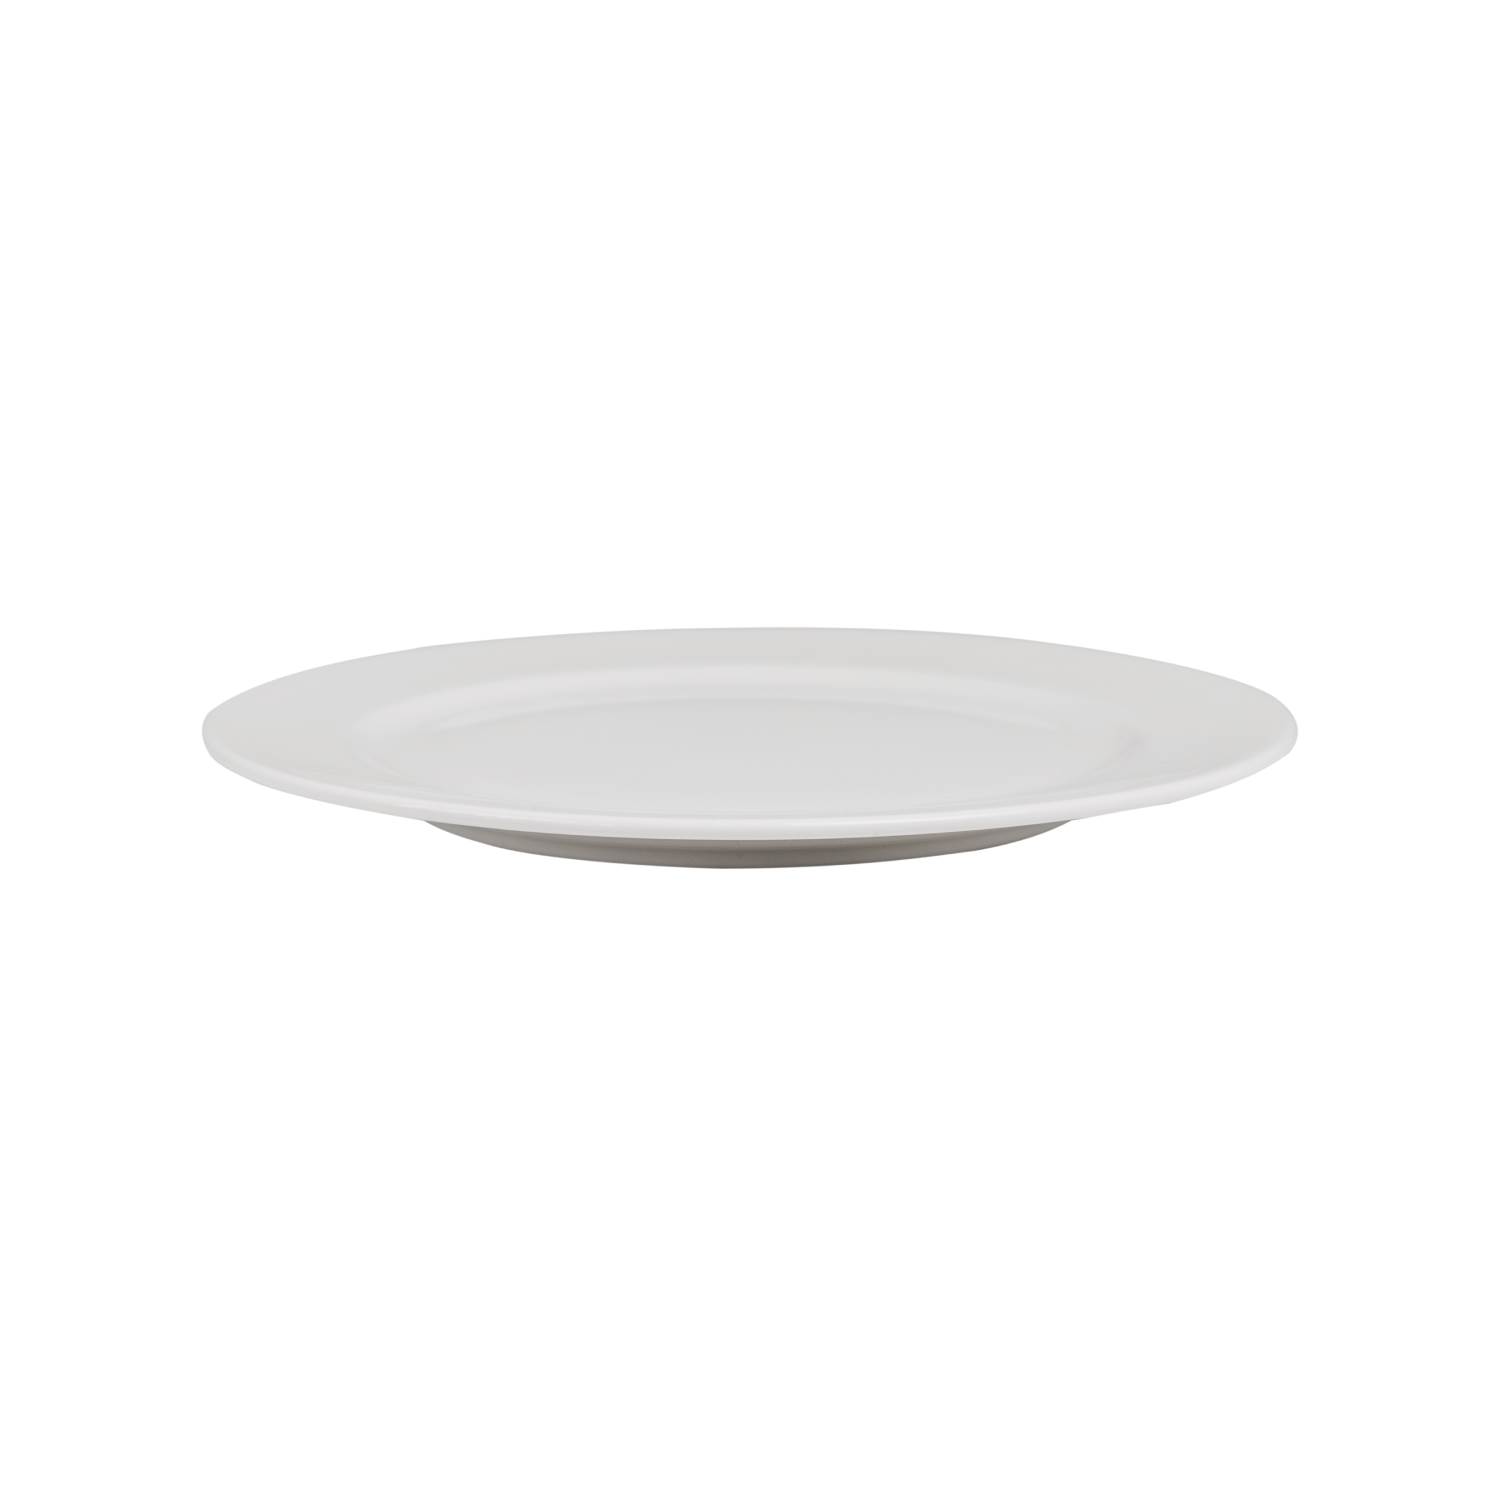 Baralee Simple Plus Flat Plate 27 Cm (10 5/8")